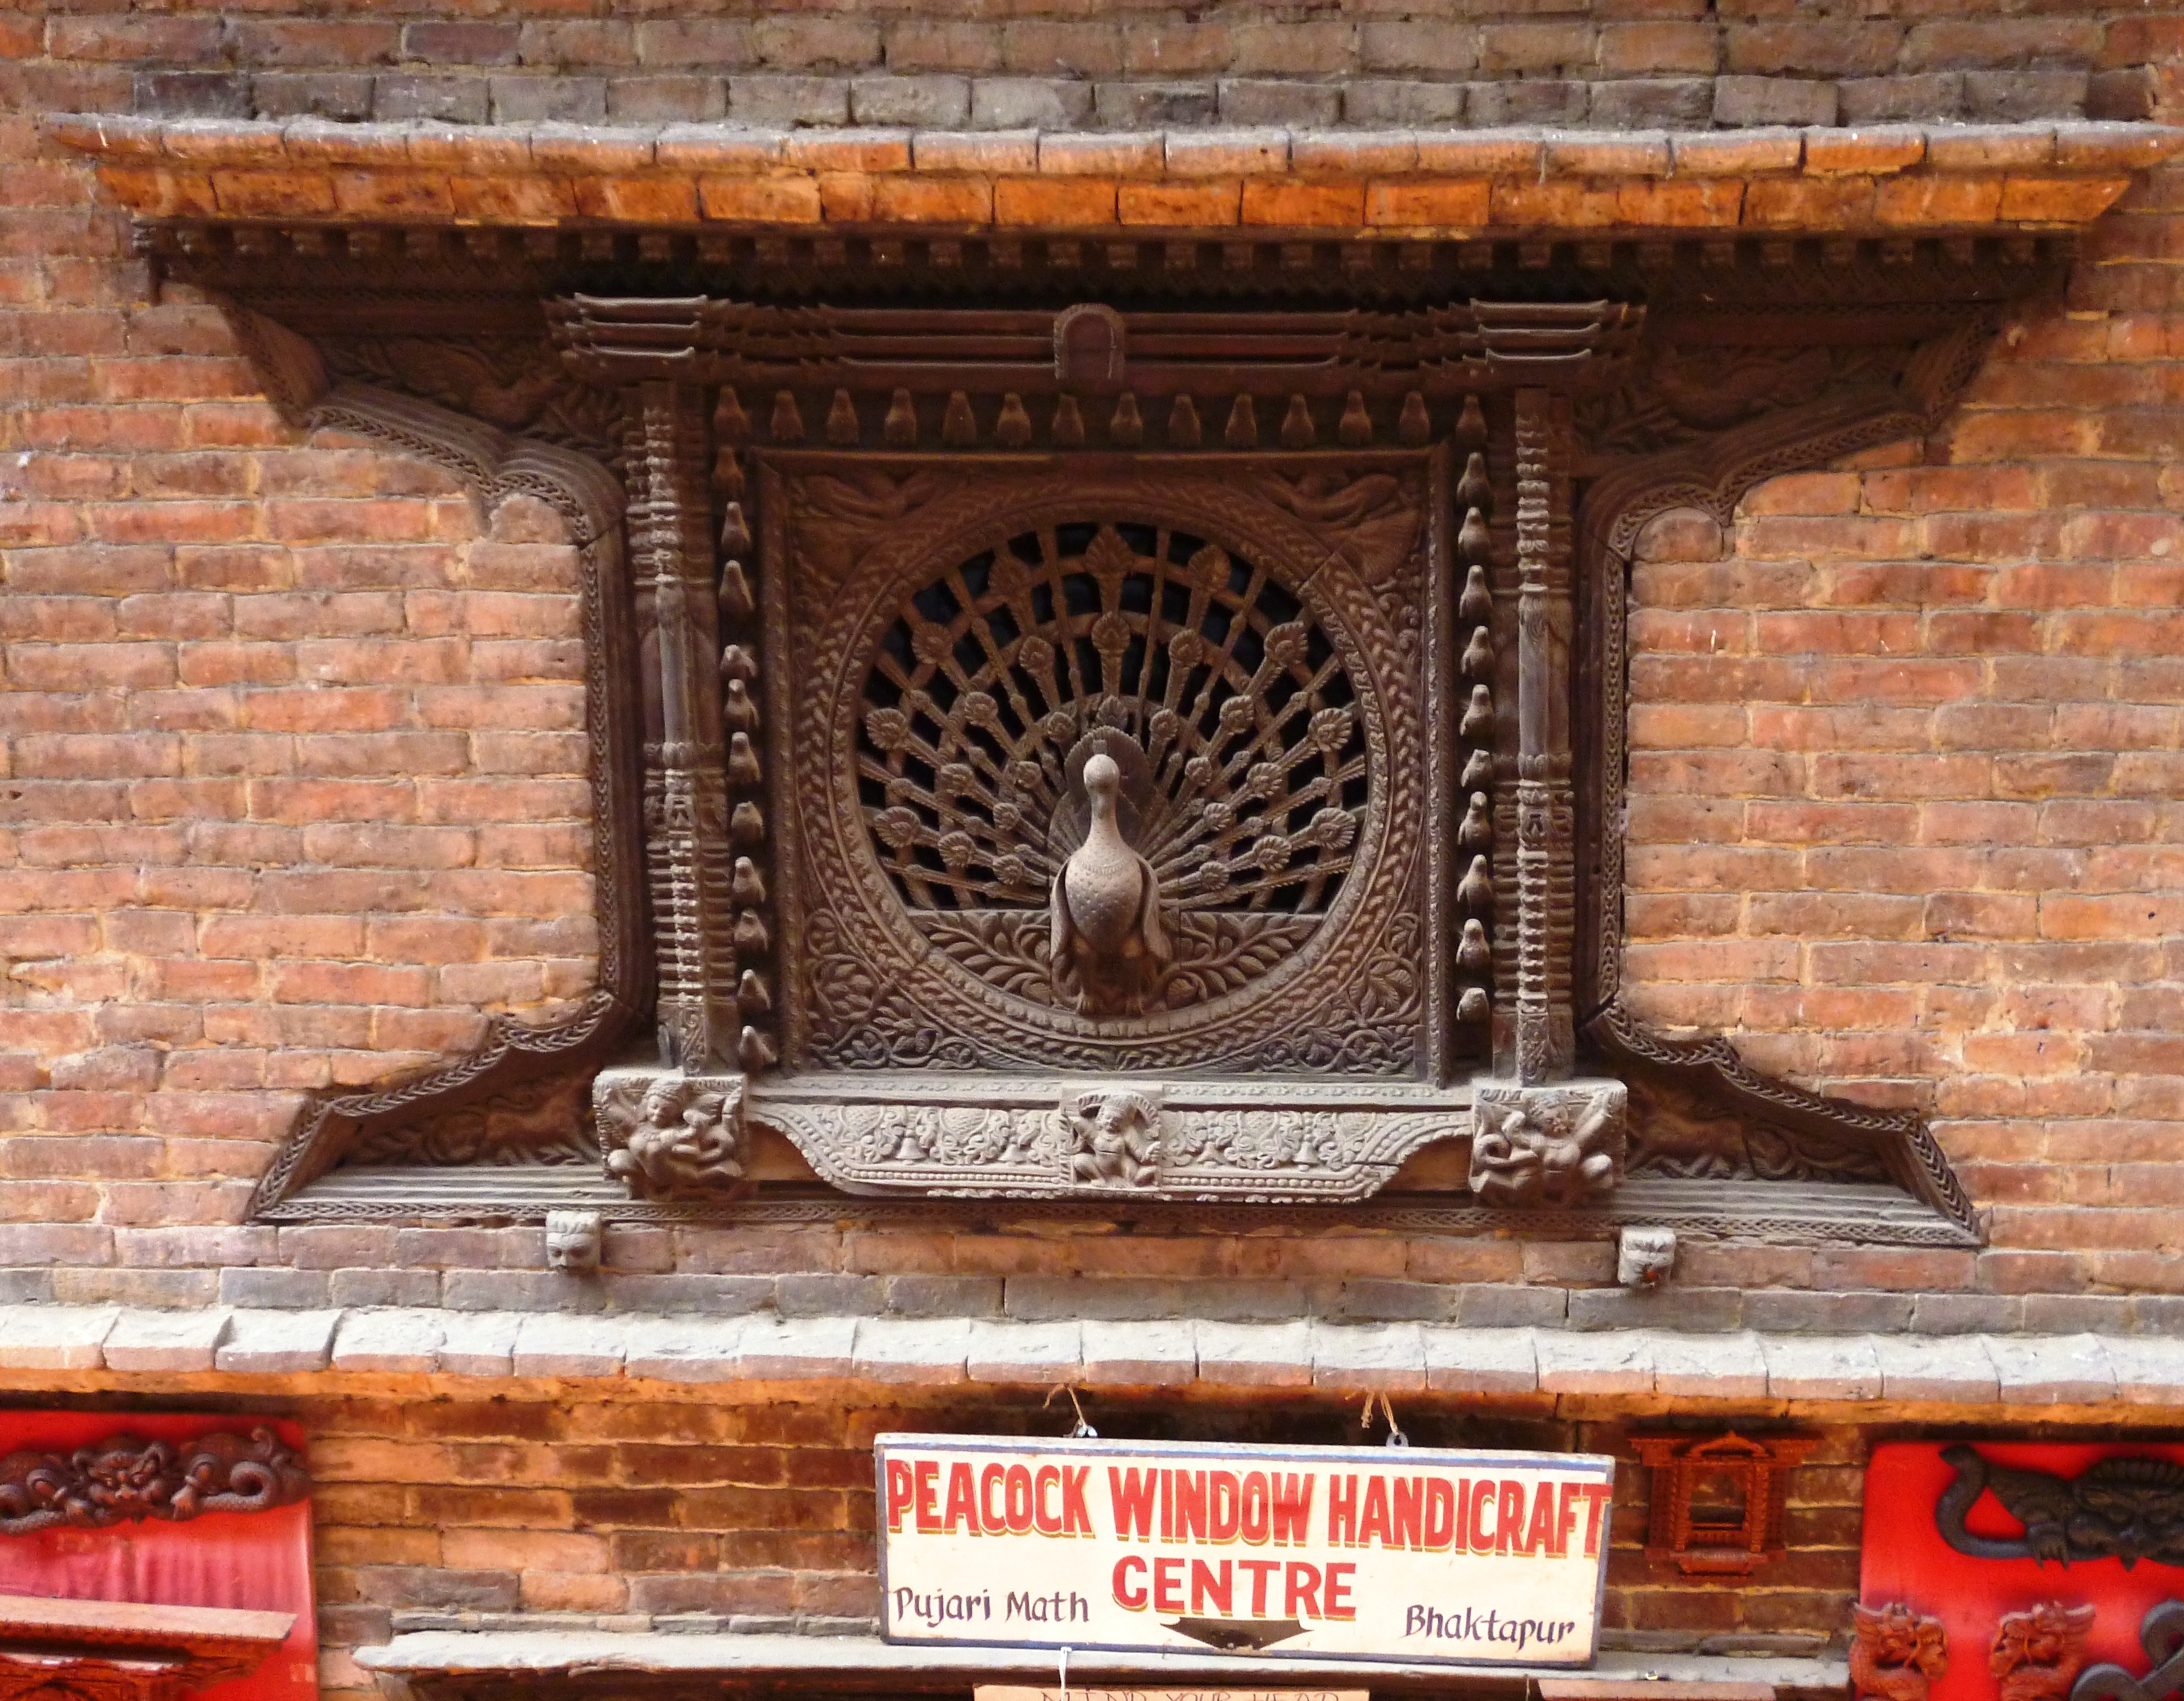 The peacock Window, the "Mona Lisa" of Nepal